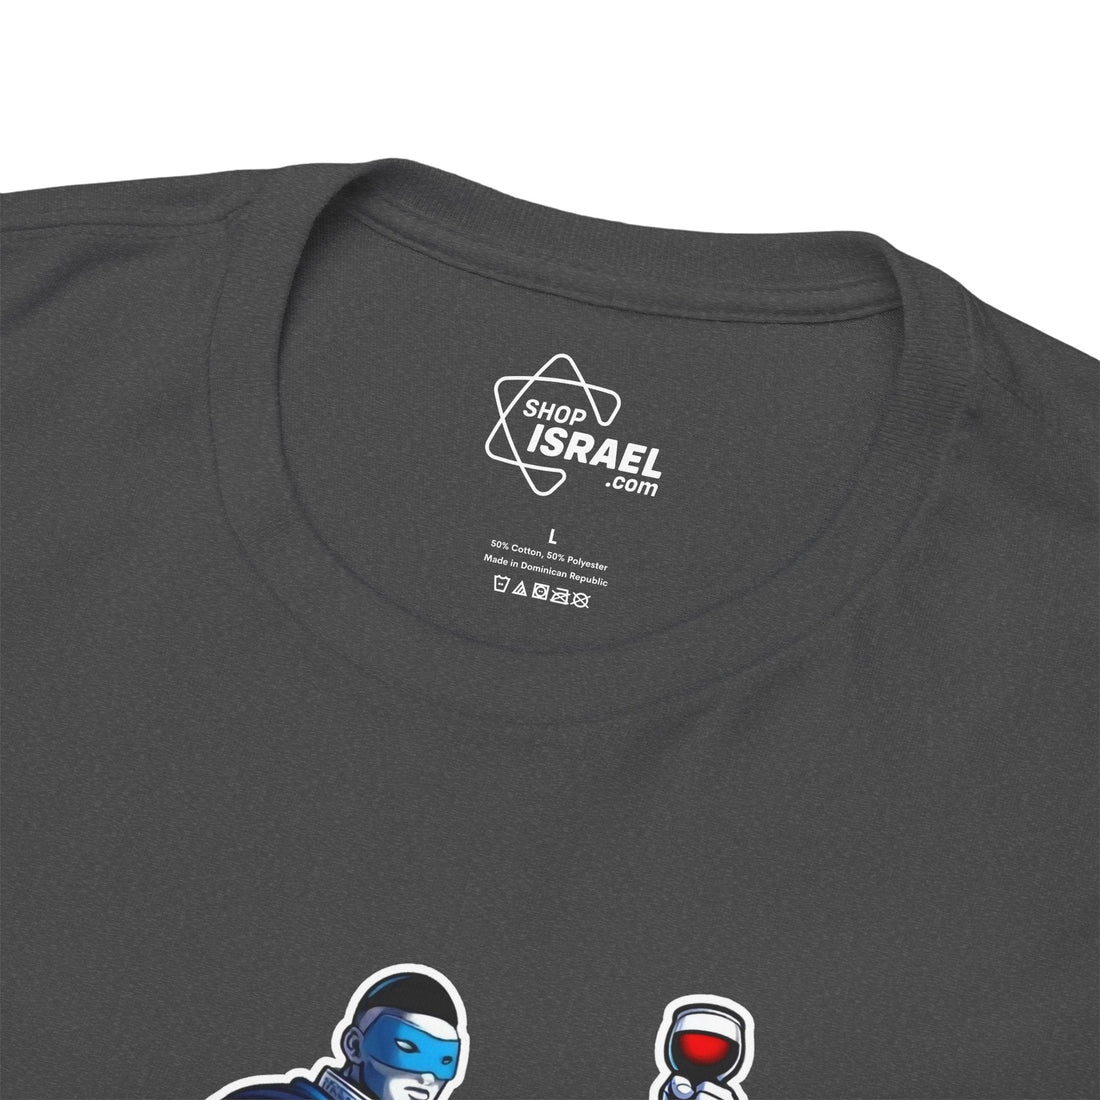 Afikoman Superhero Passover T-Shirt - Shop Israel